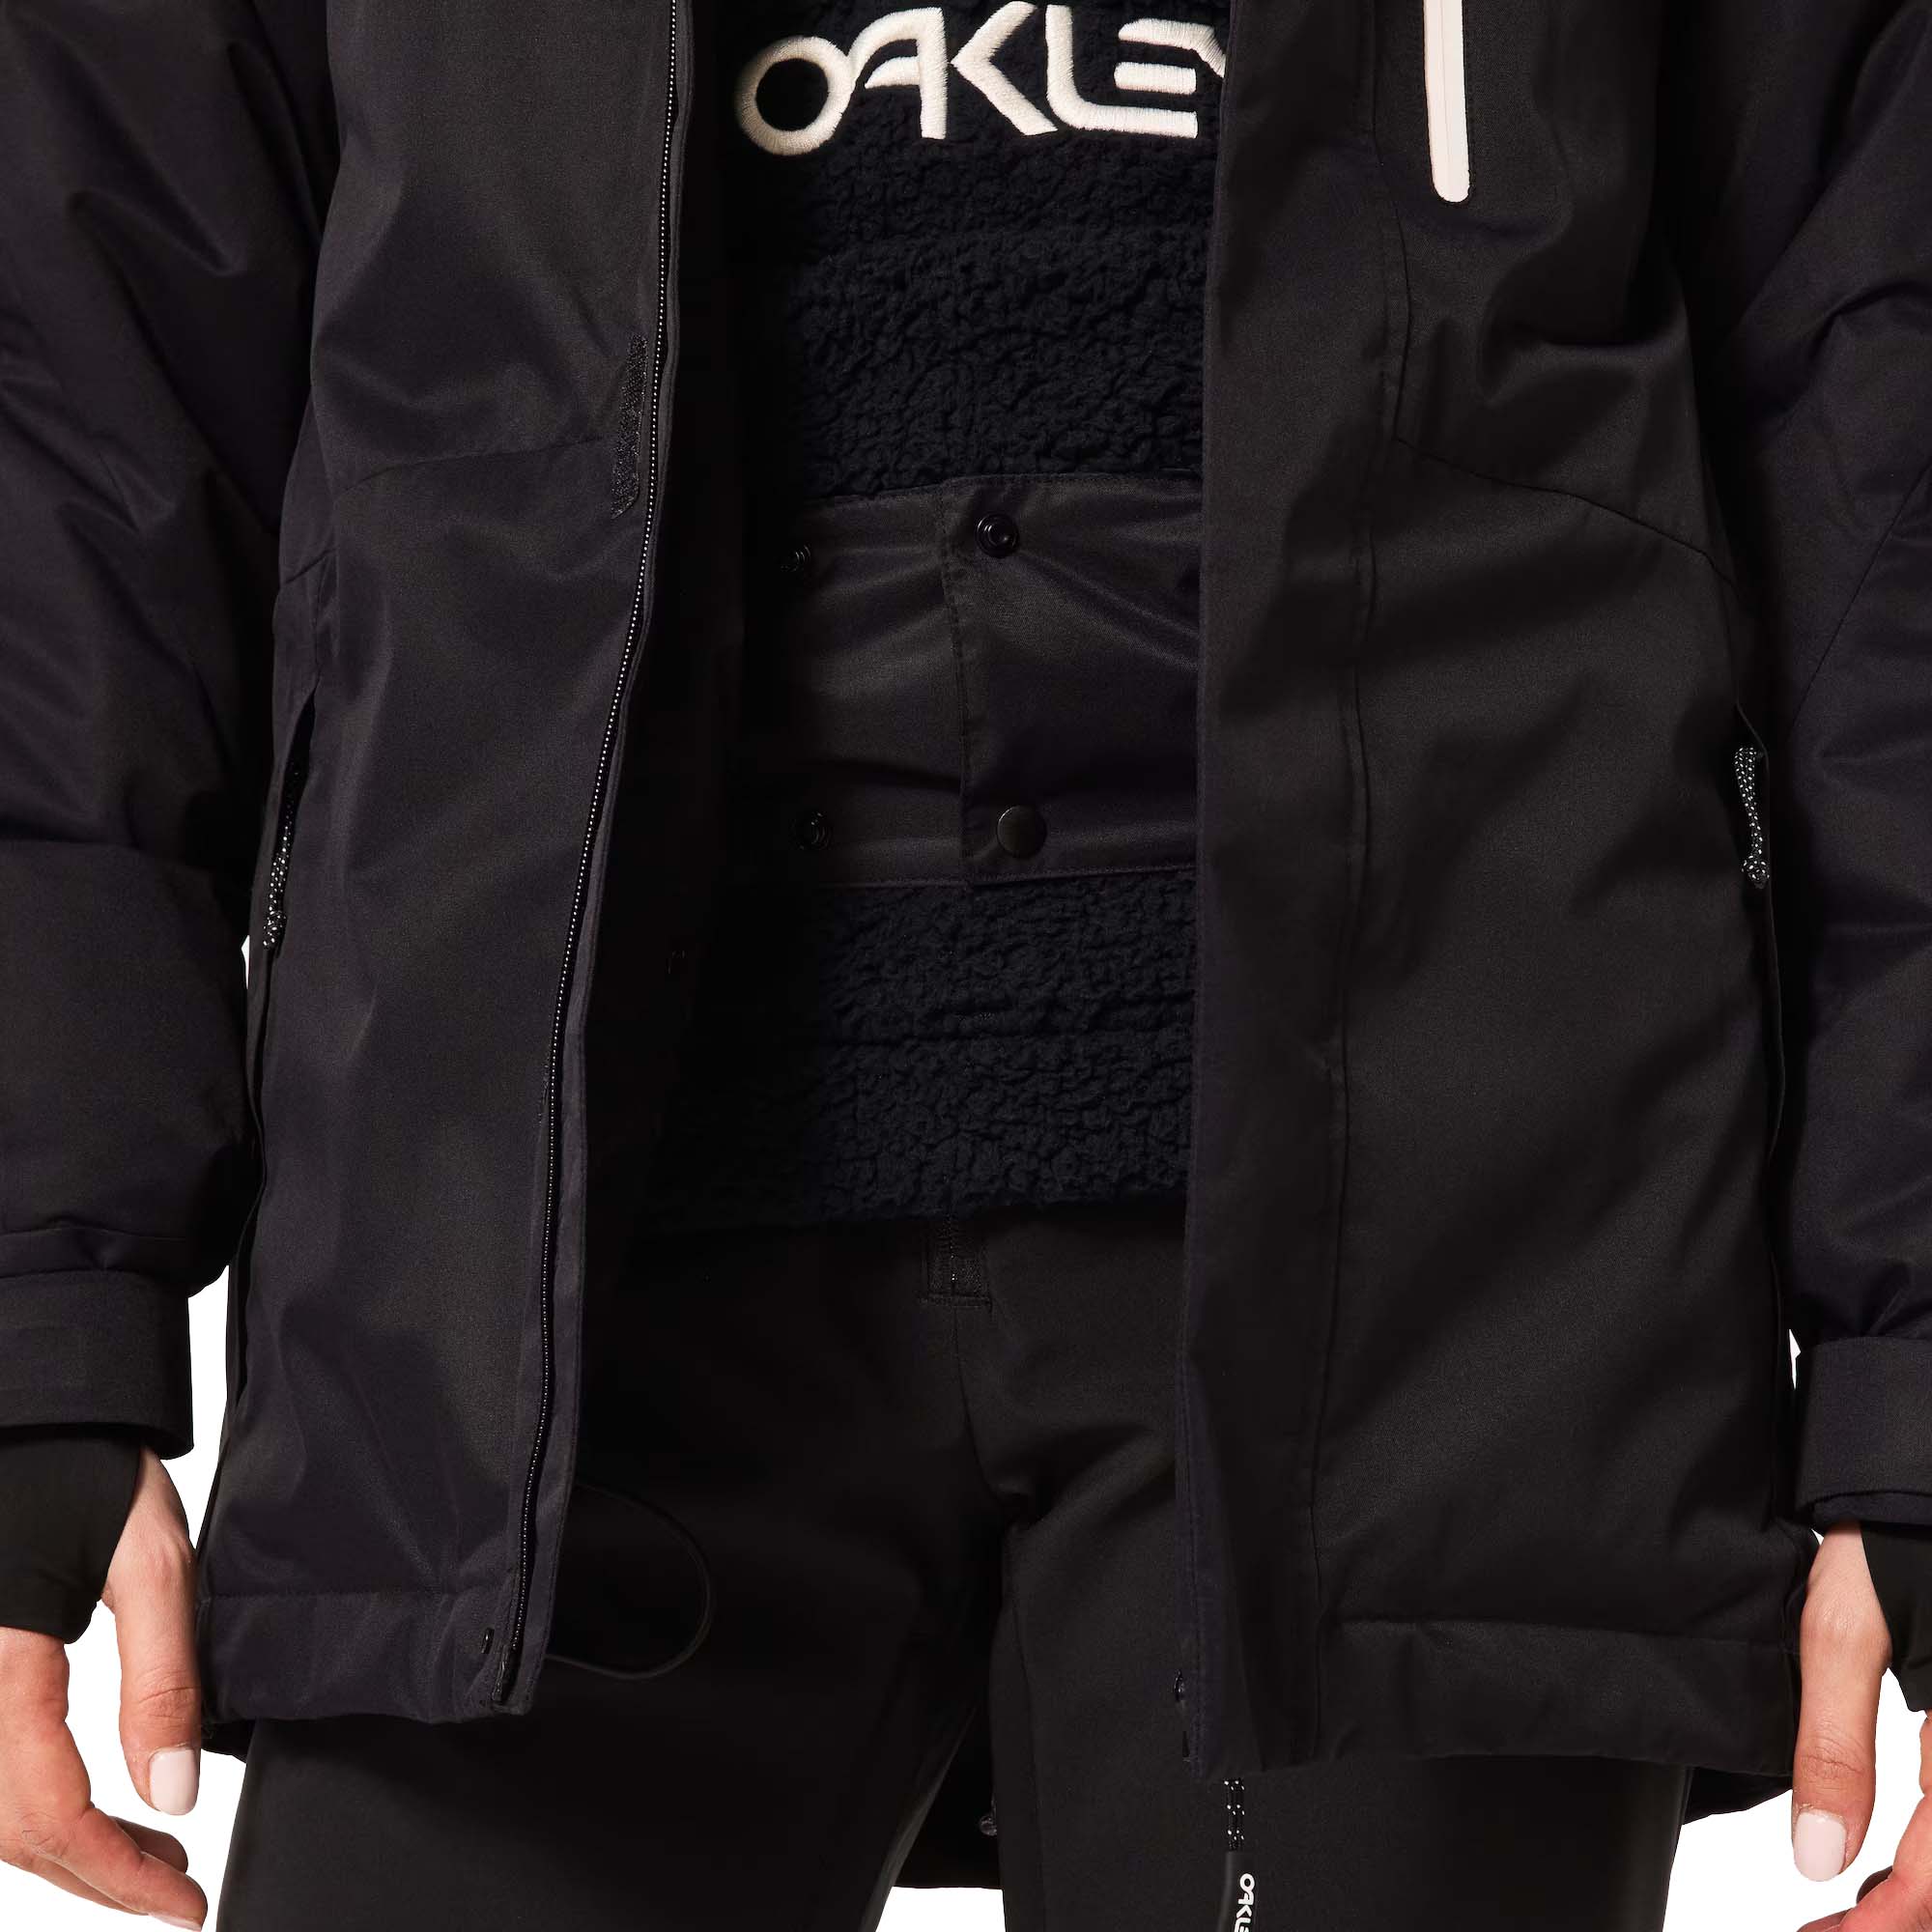 Oakley TNP TBT Insulated Women's Ski/Snowboard Jacket